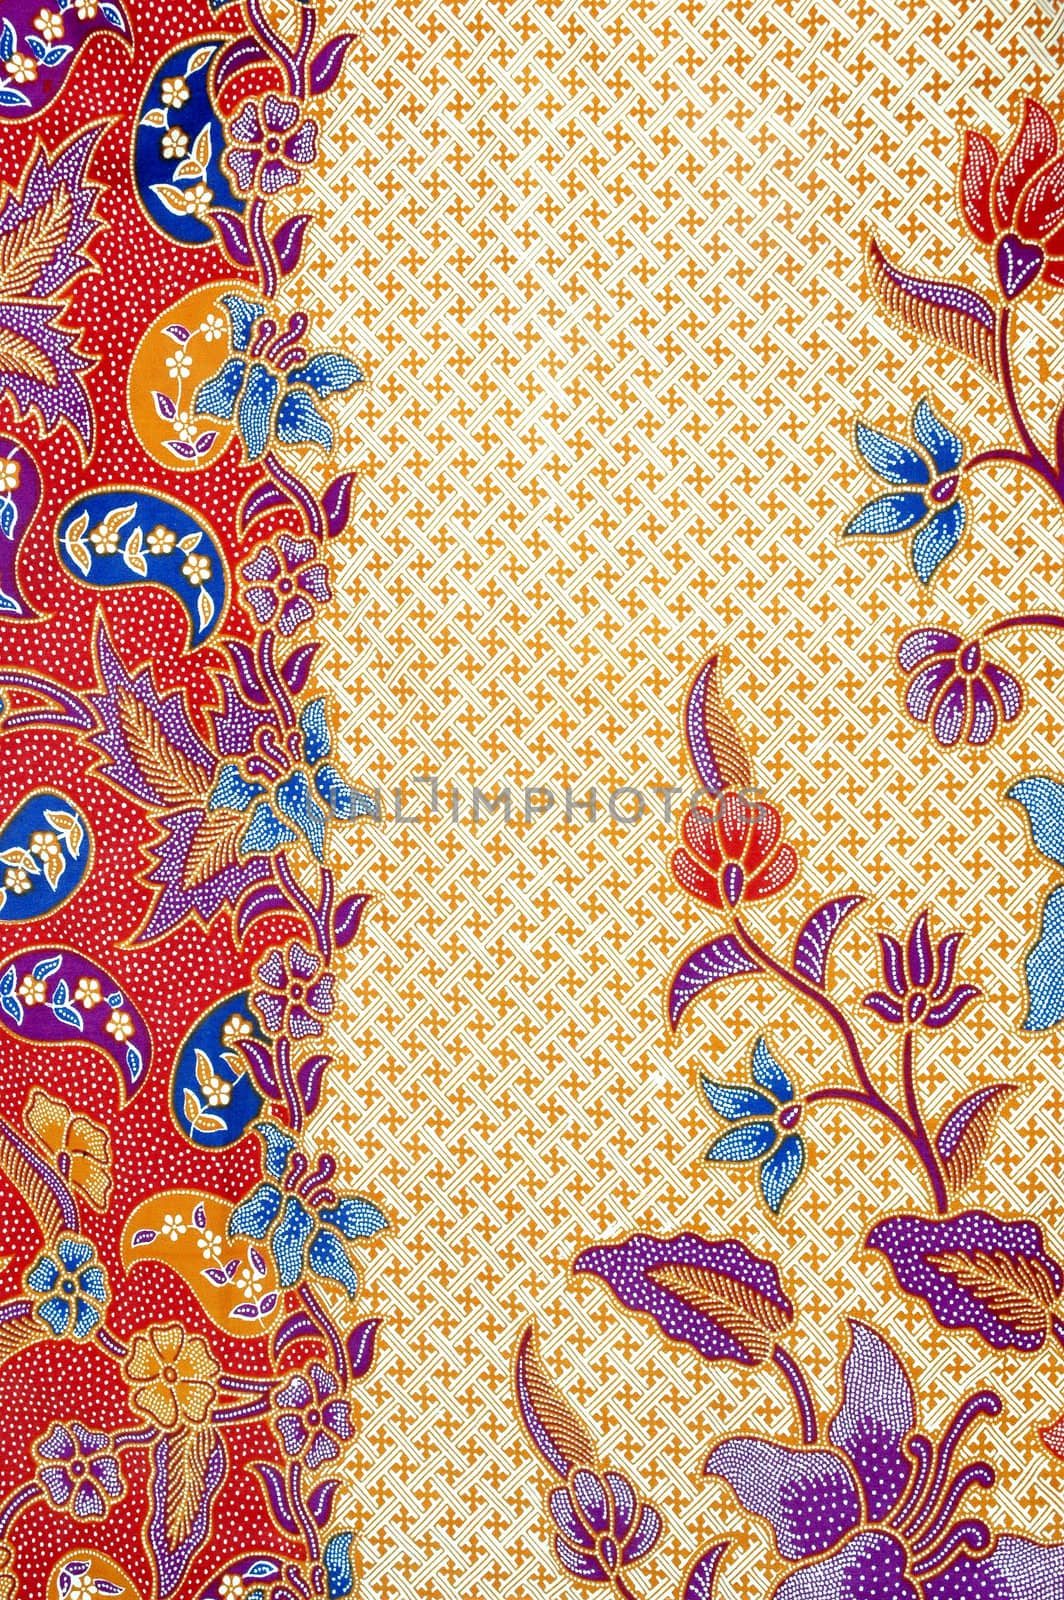 detailed patterns of indonesian batik cloth 